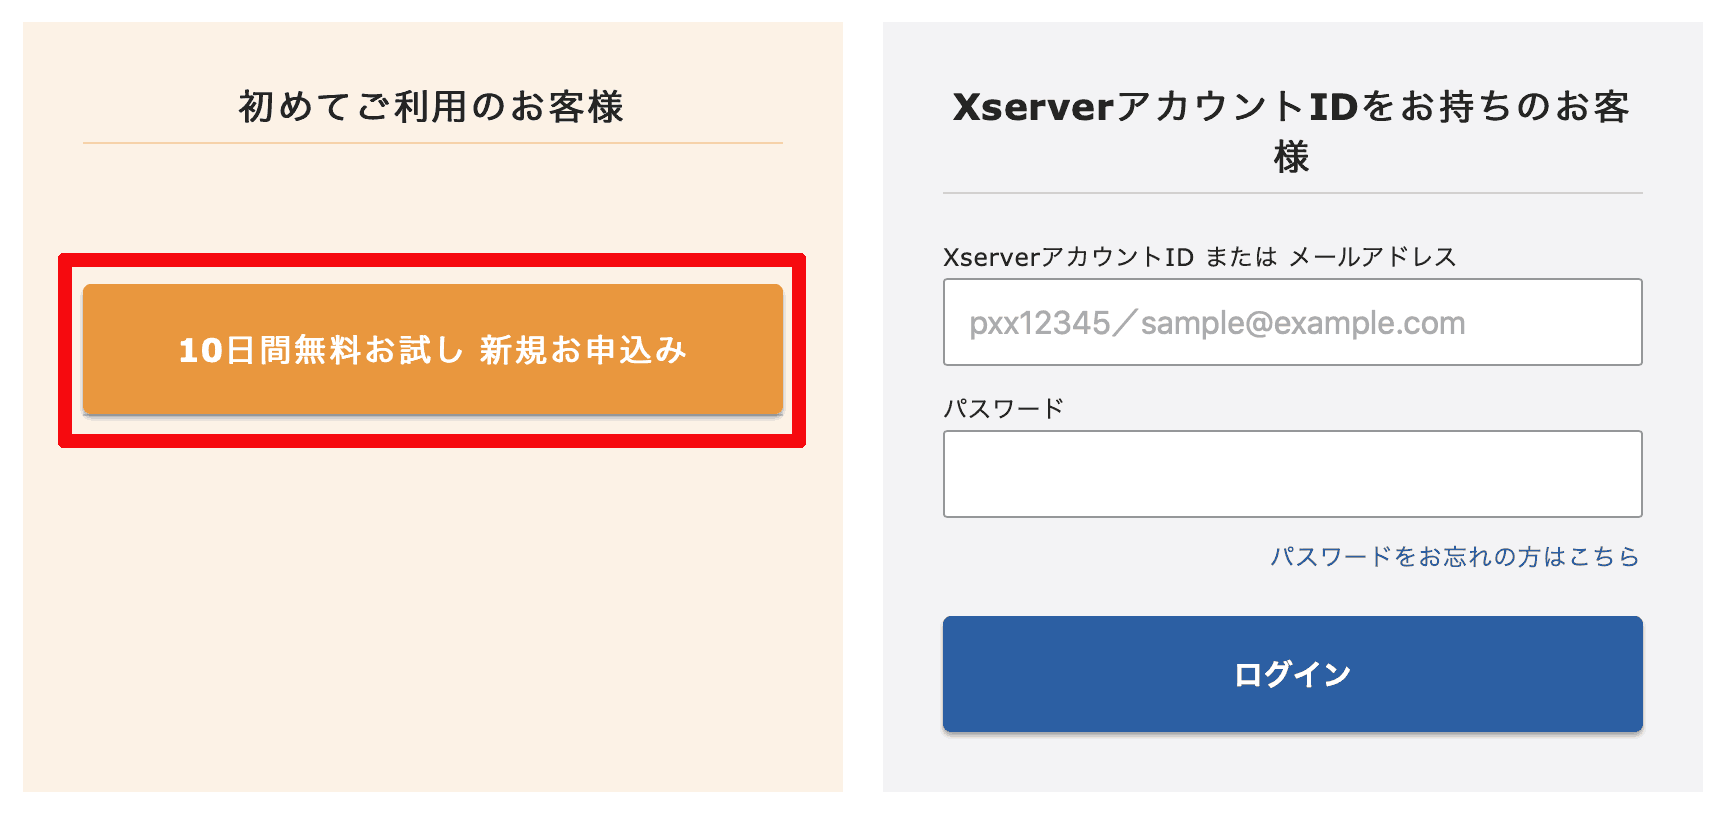 XSERVER 申し込みフォーム